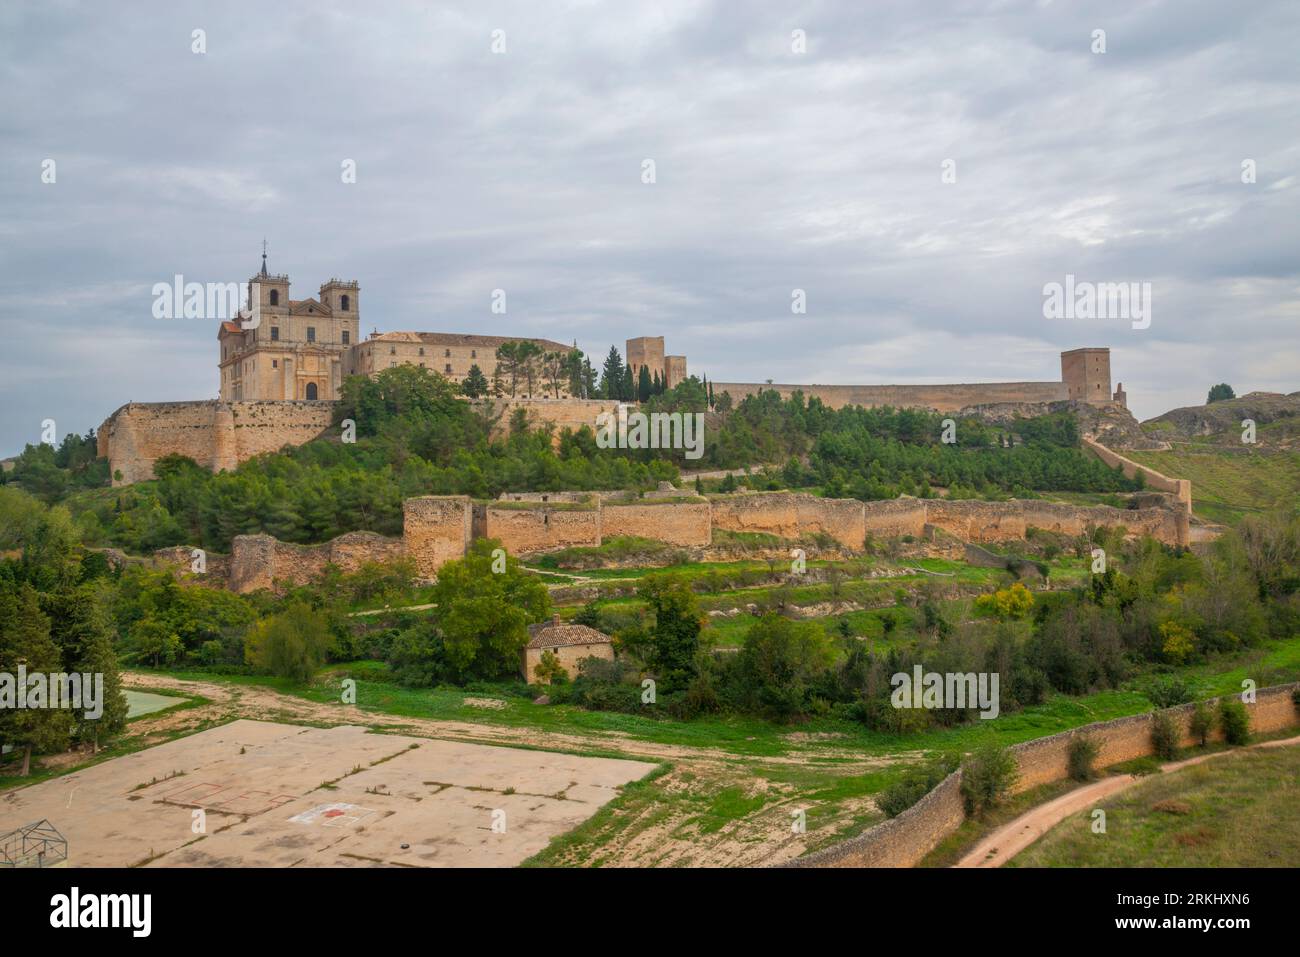 Monastery and castle, Ucles, Cuenca province, Castilla La Mancha, Spain. Stock Photo